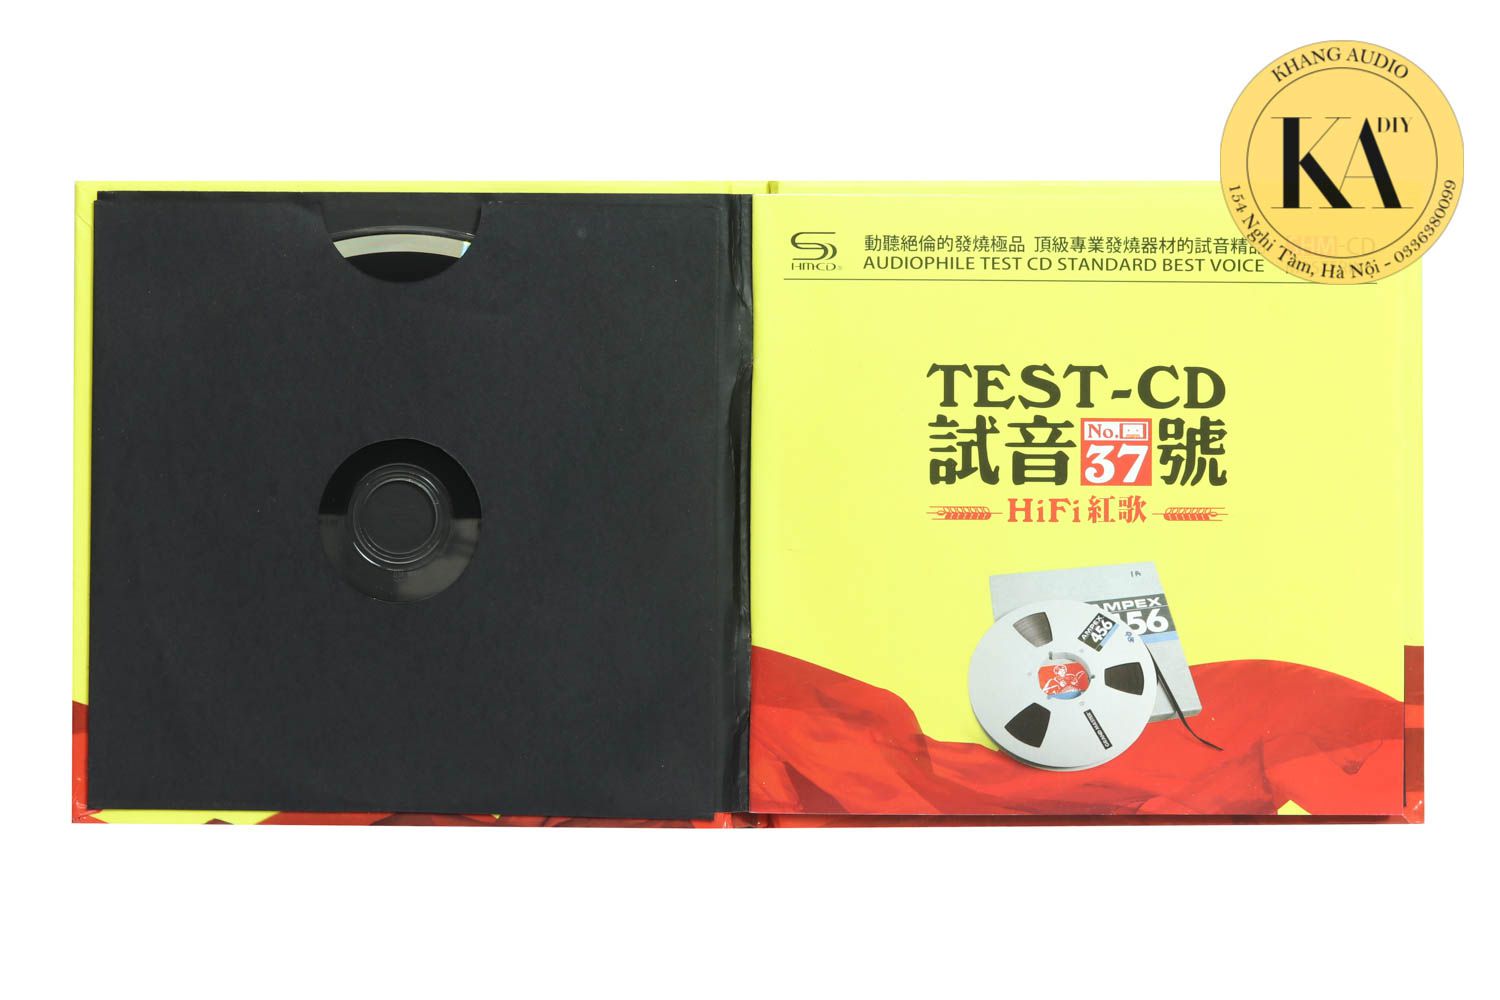 Test CD No.37 Khang Audio 0336380099